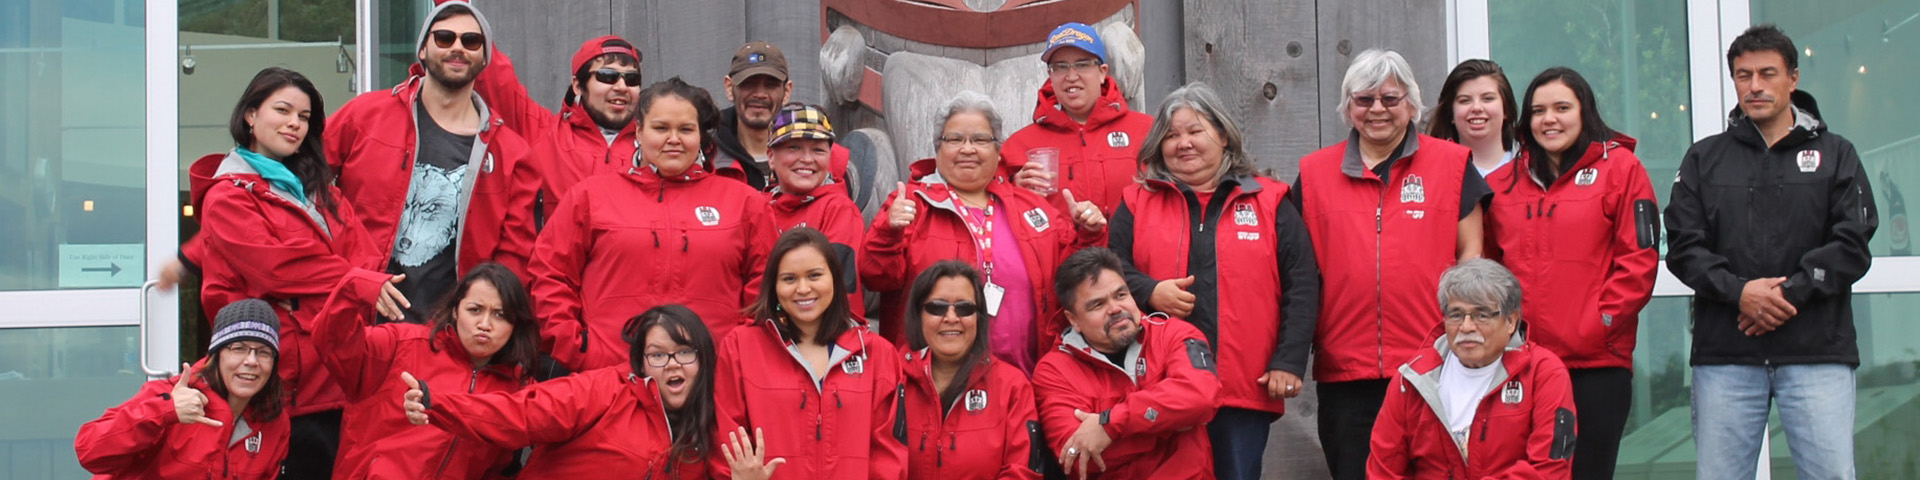 Photo de groupe des gardiens de Haida Gwaii 